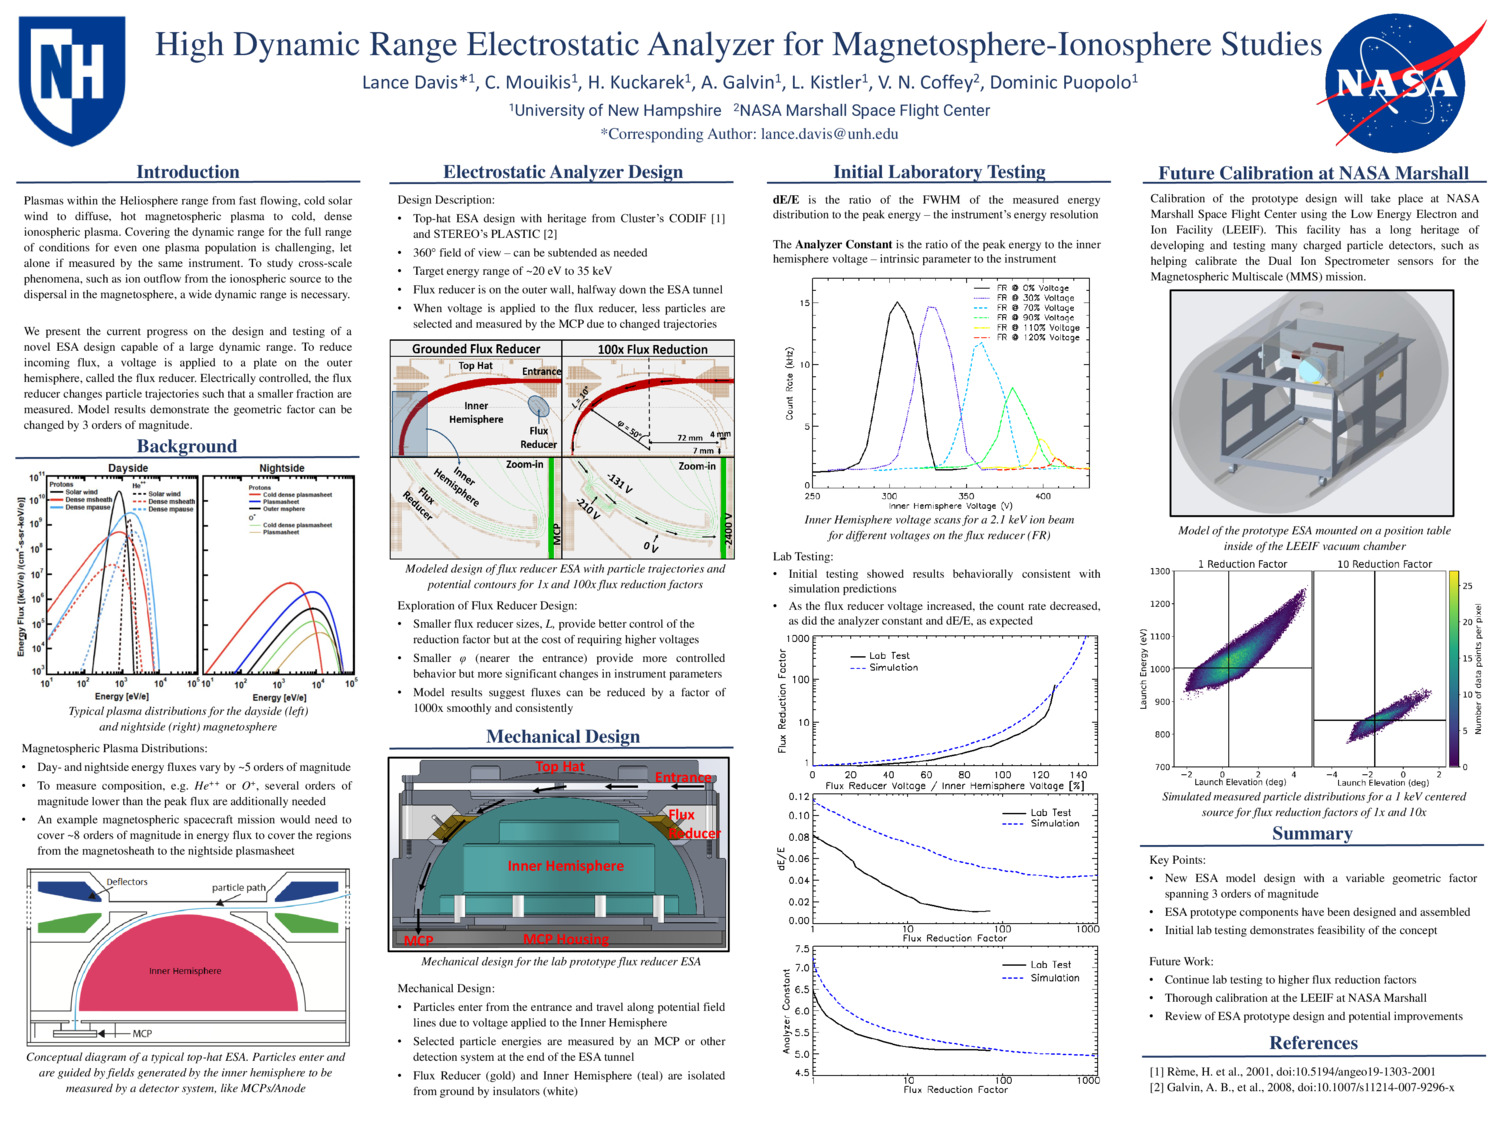 High Dynamic Range Electrostatic Analyzer For Magnetosphere-Ionosphere Studies by Ldavis